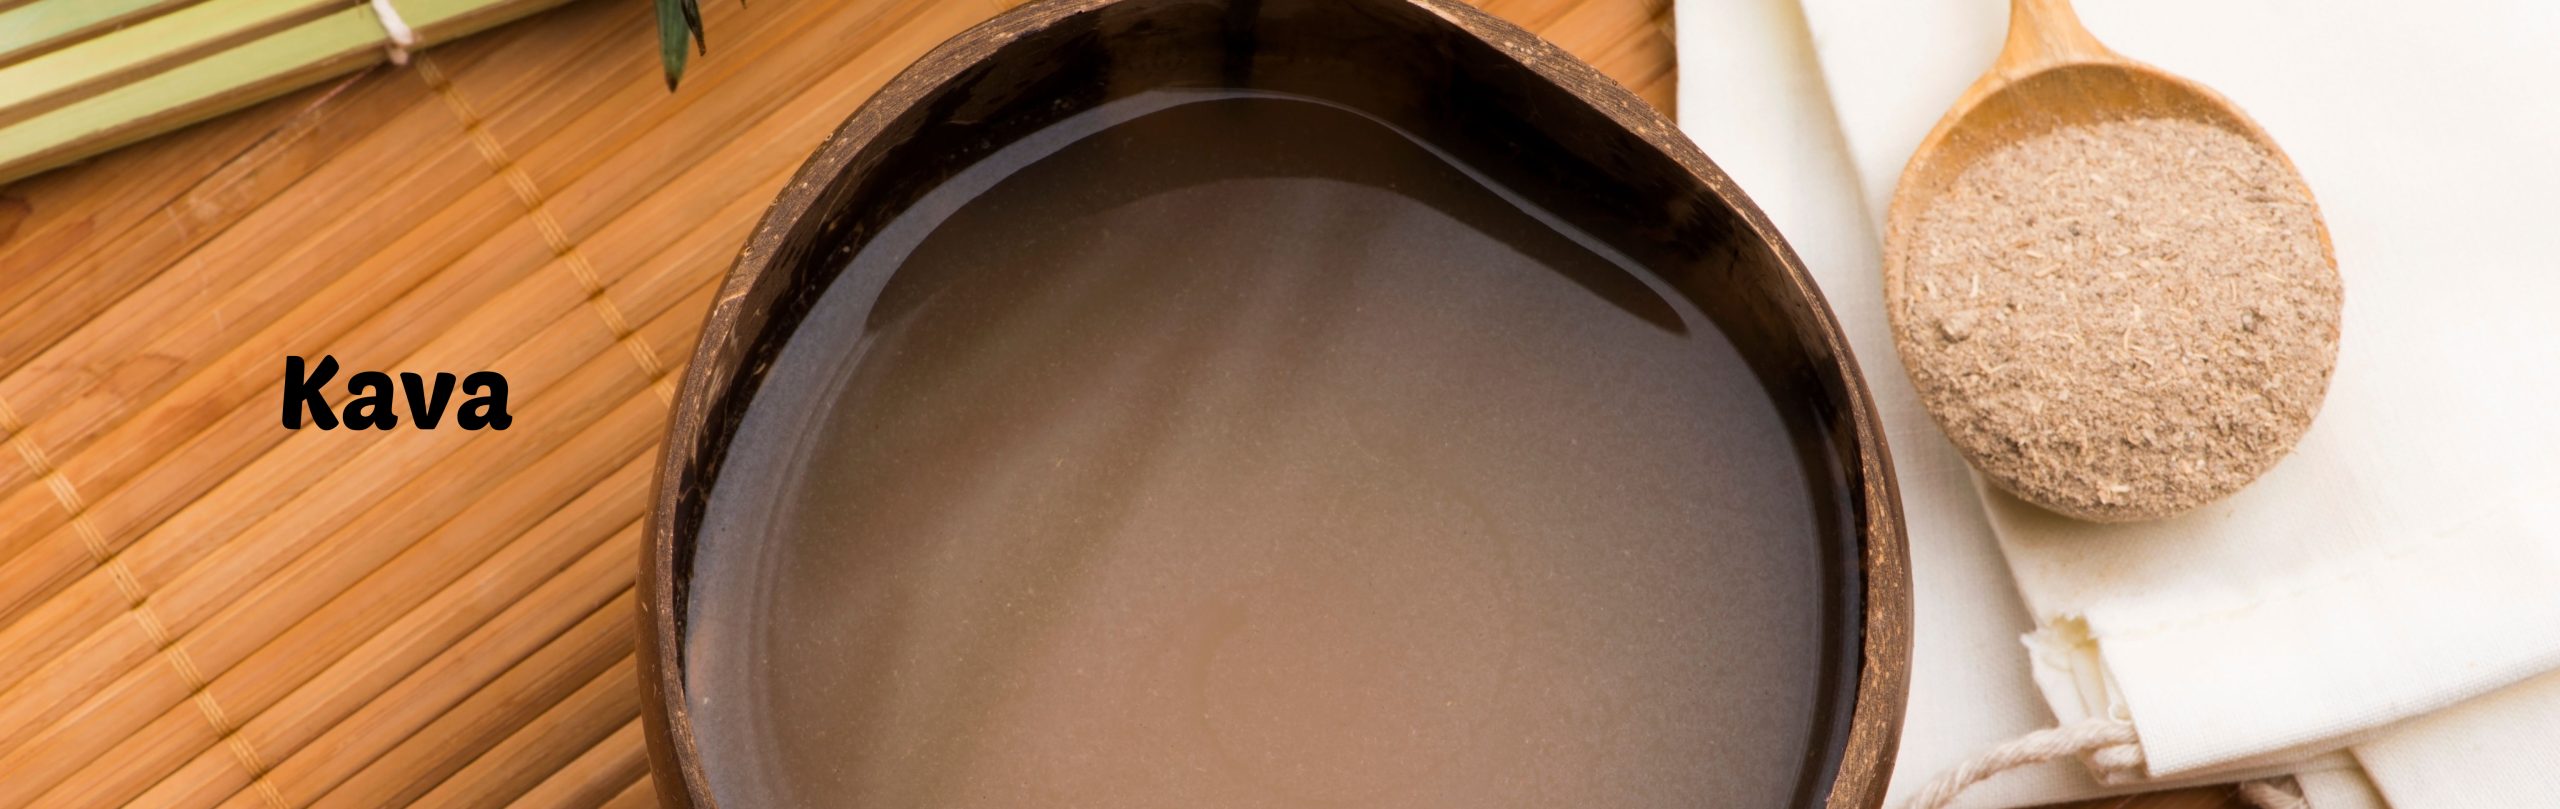 image of kava kratom natural potentiators